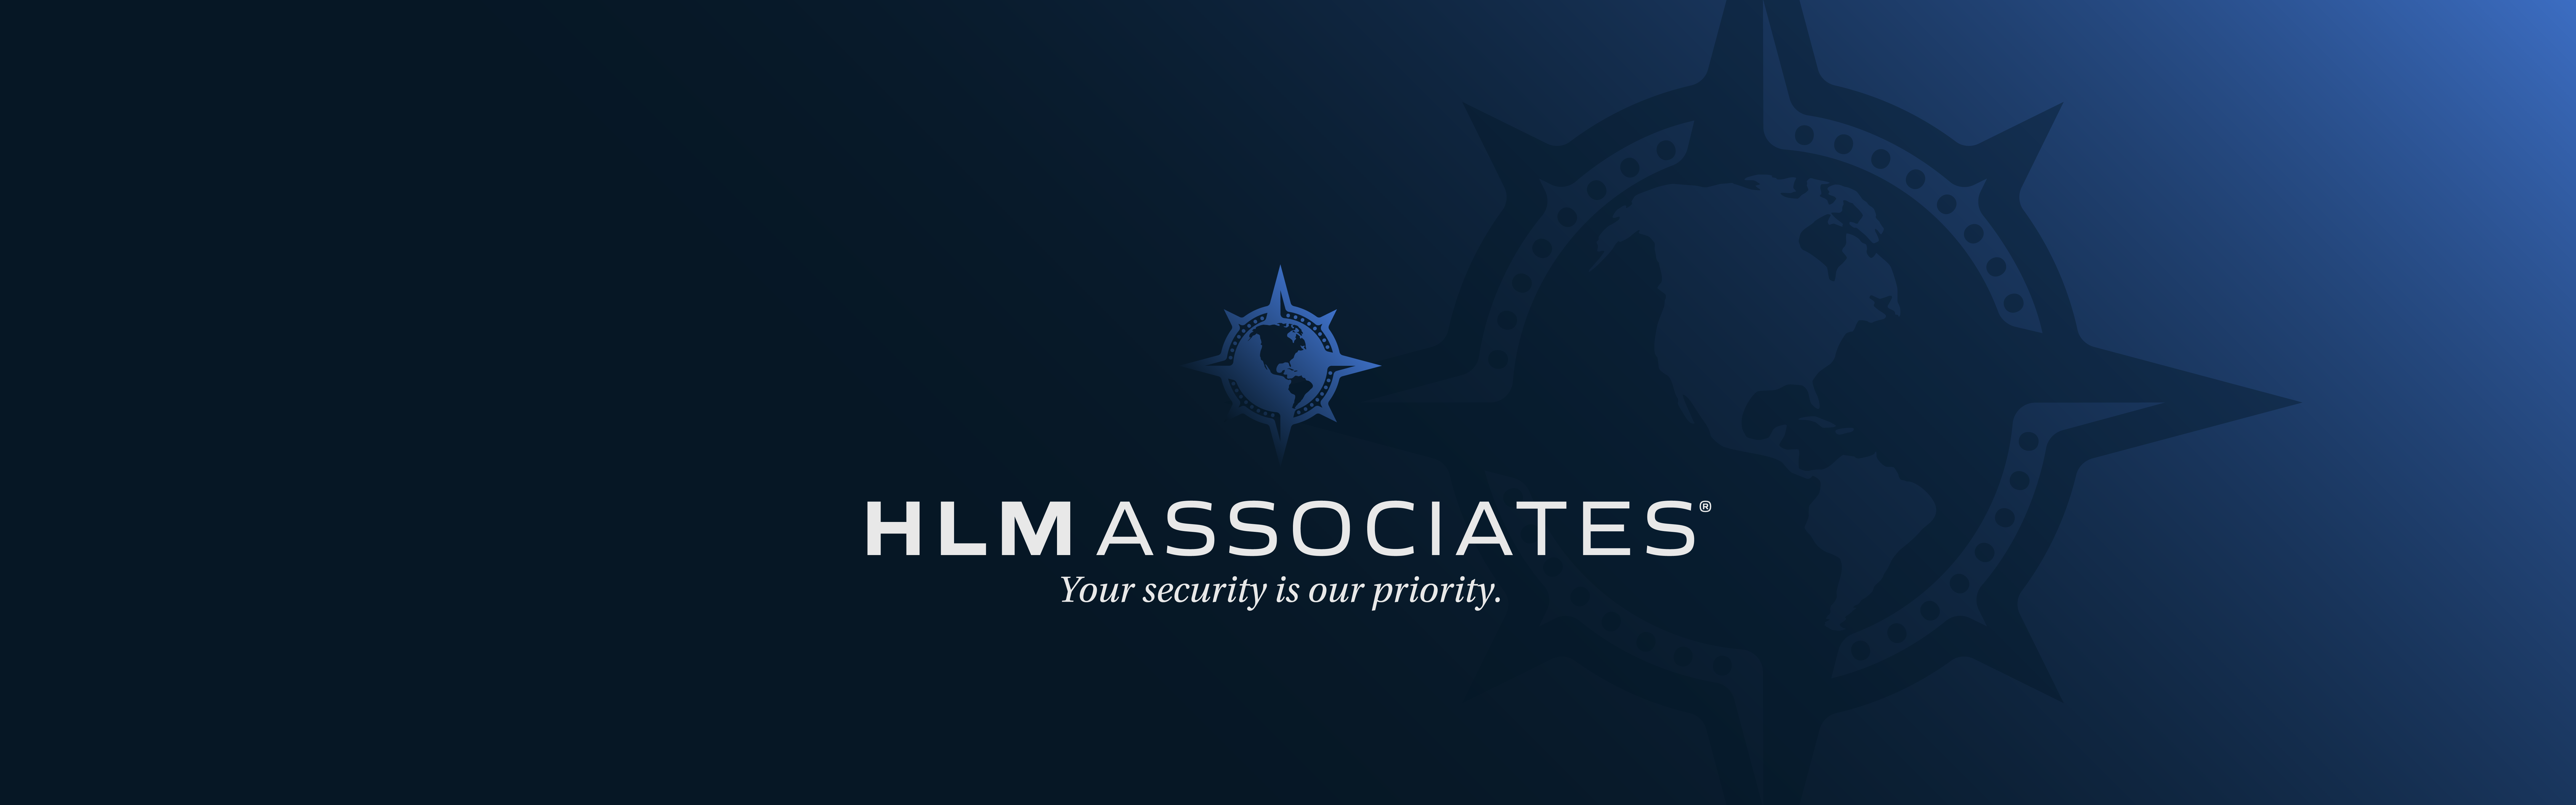 HLM Associates dark blue logo design